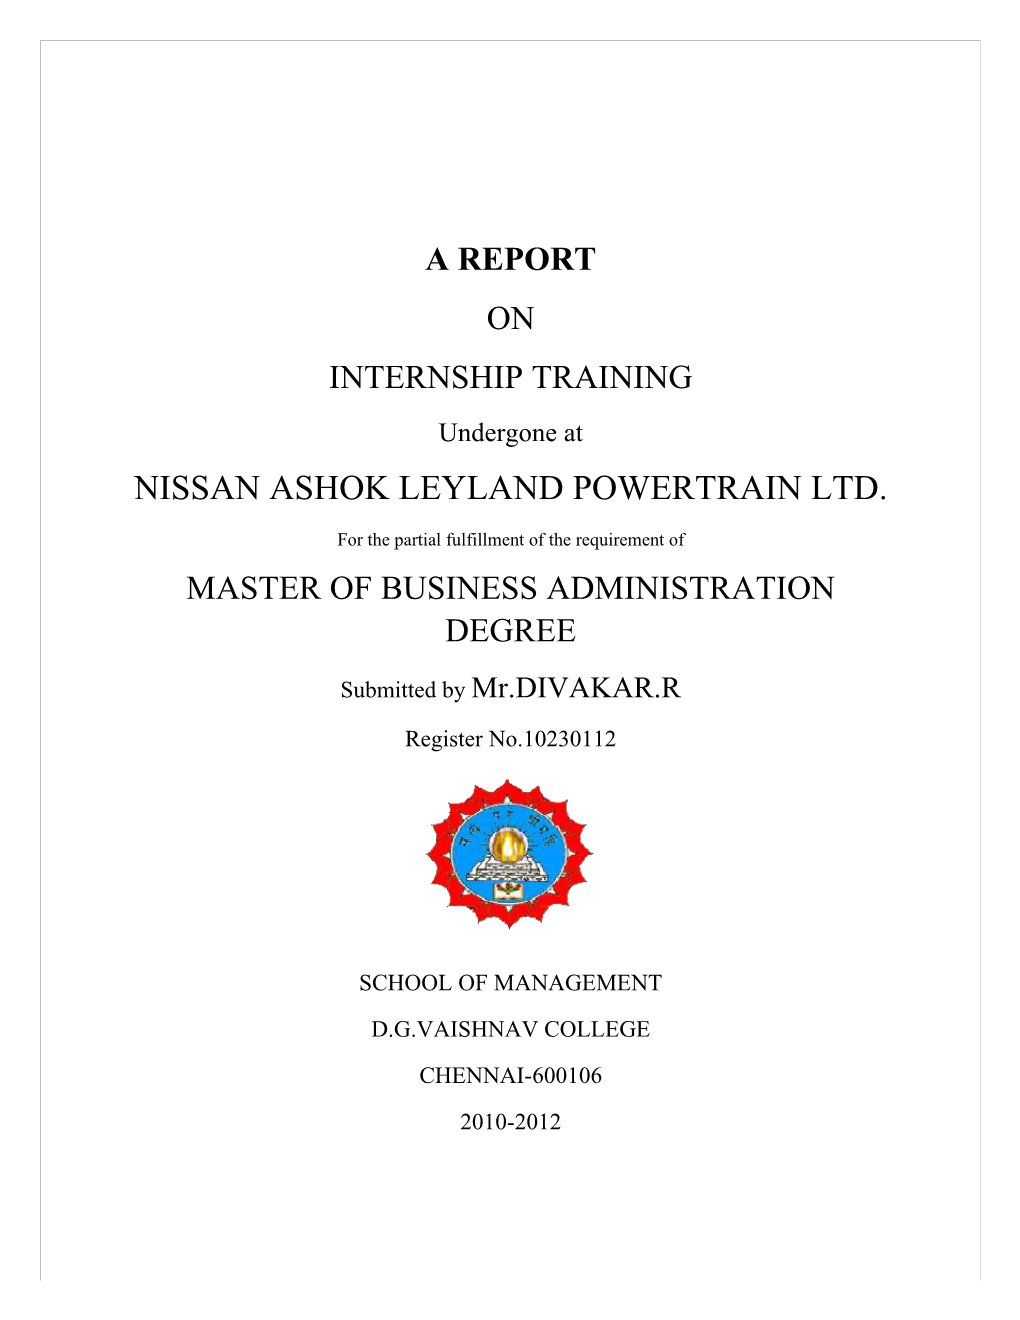 Nissan Ashok Leyland Powertrain Ltd